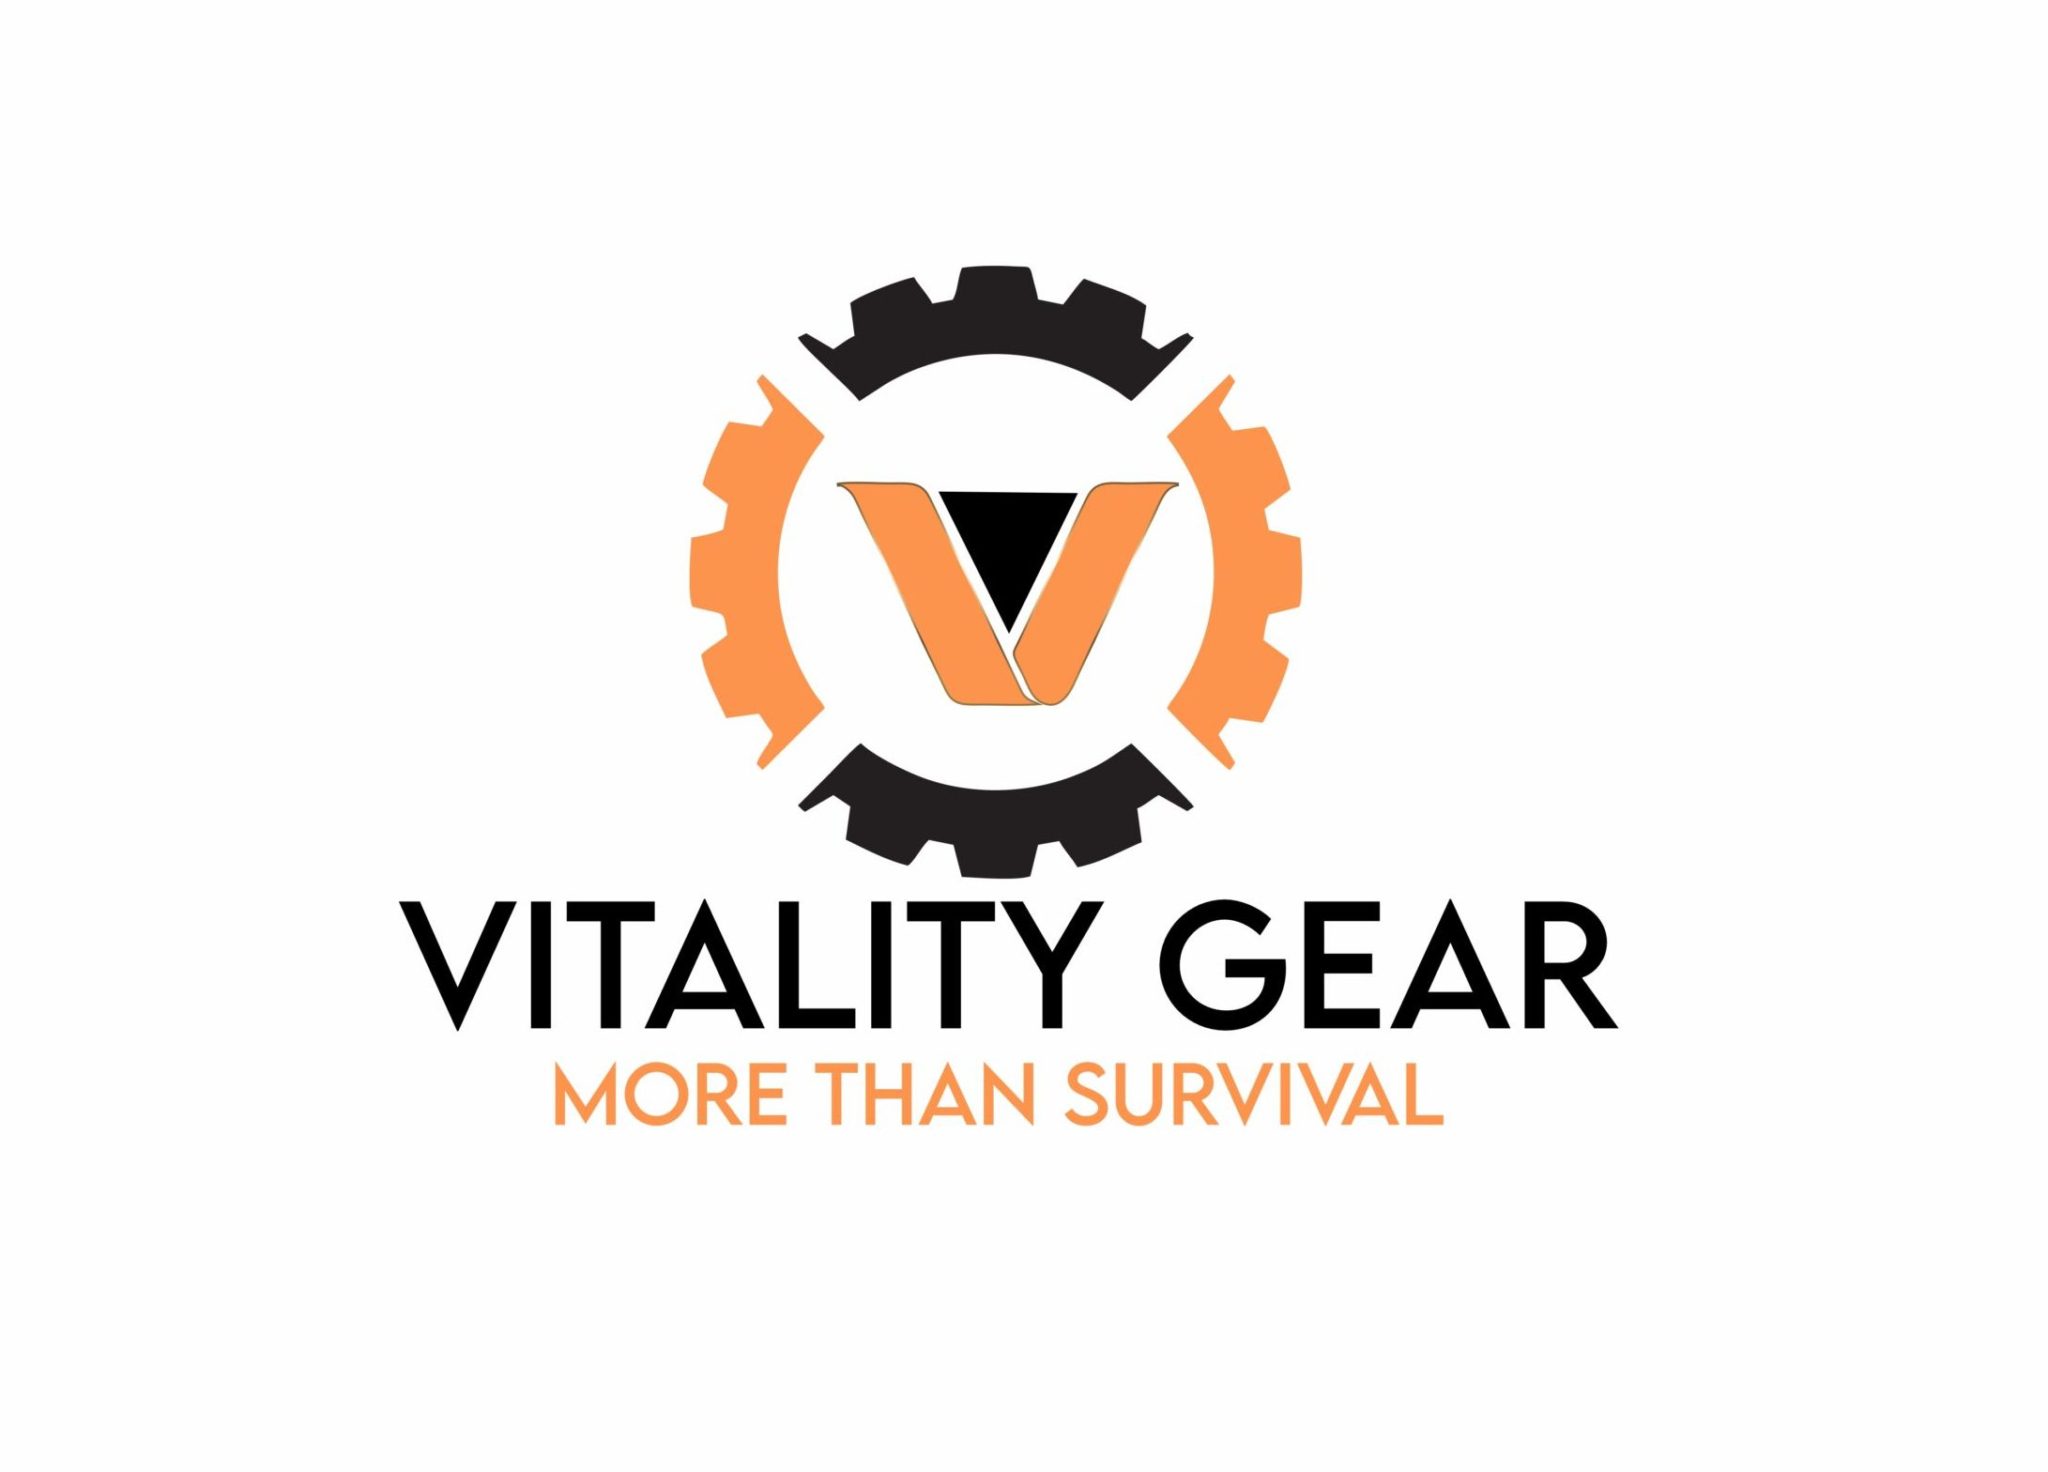 (c) Vitalitygear.com